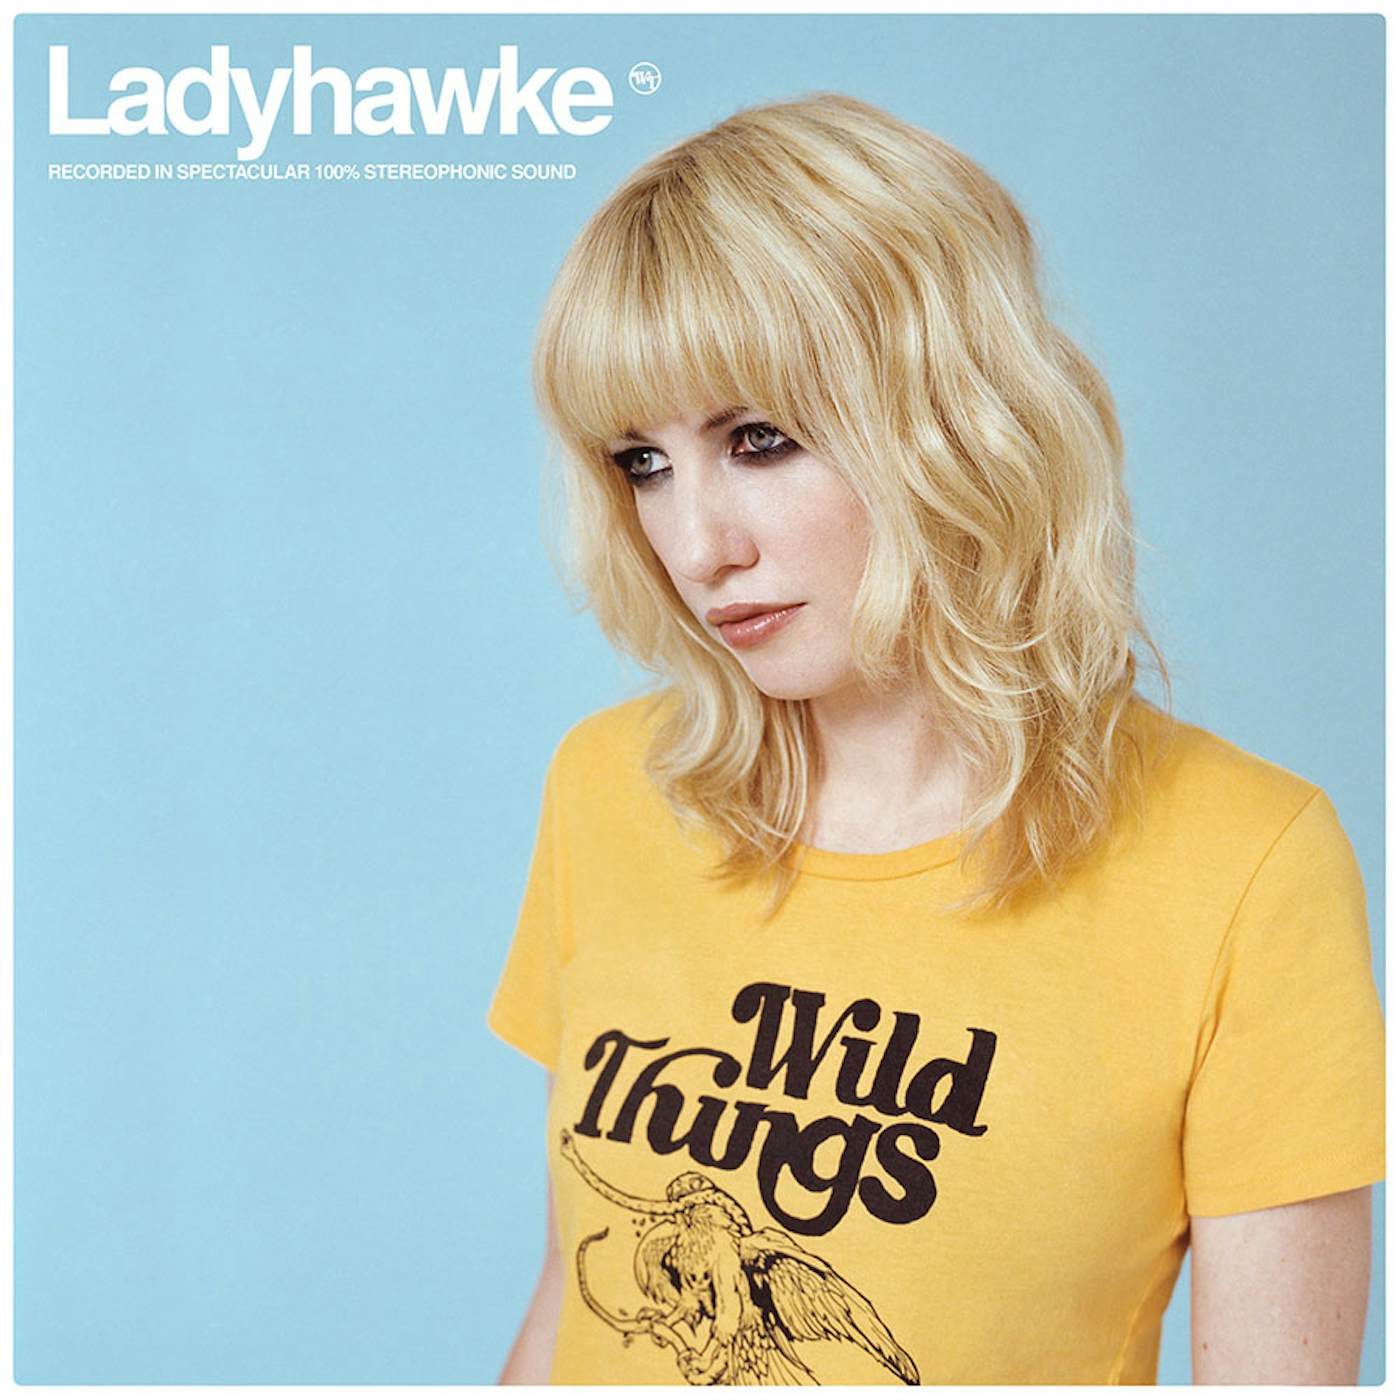 Ladyhawke Wild Things Vinyl Record